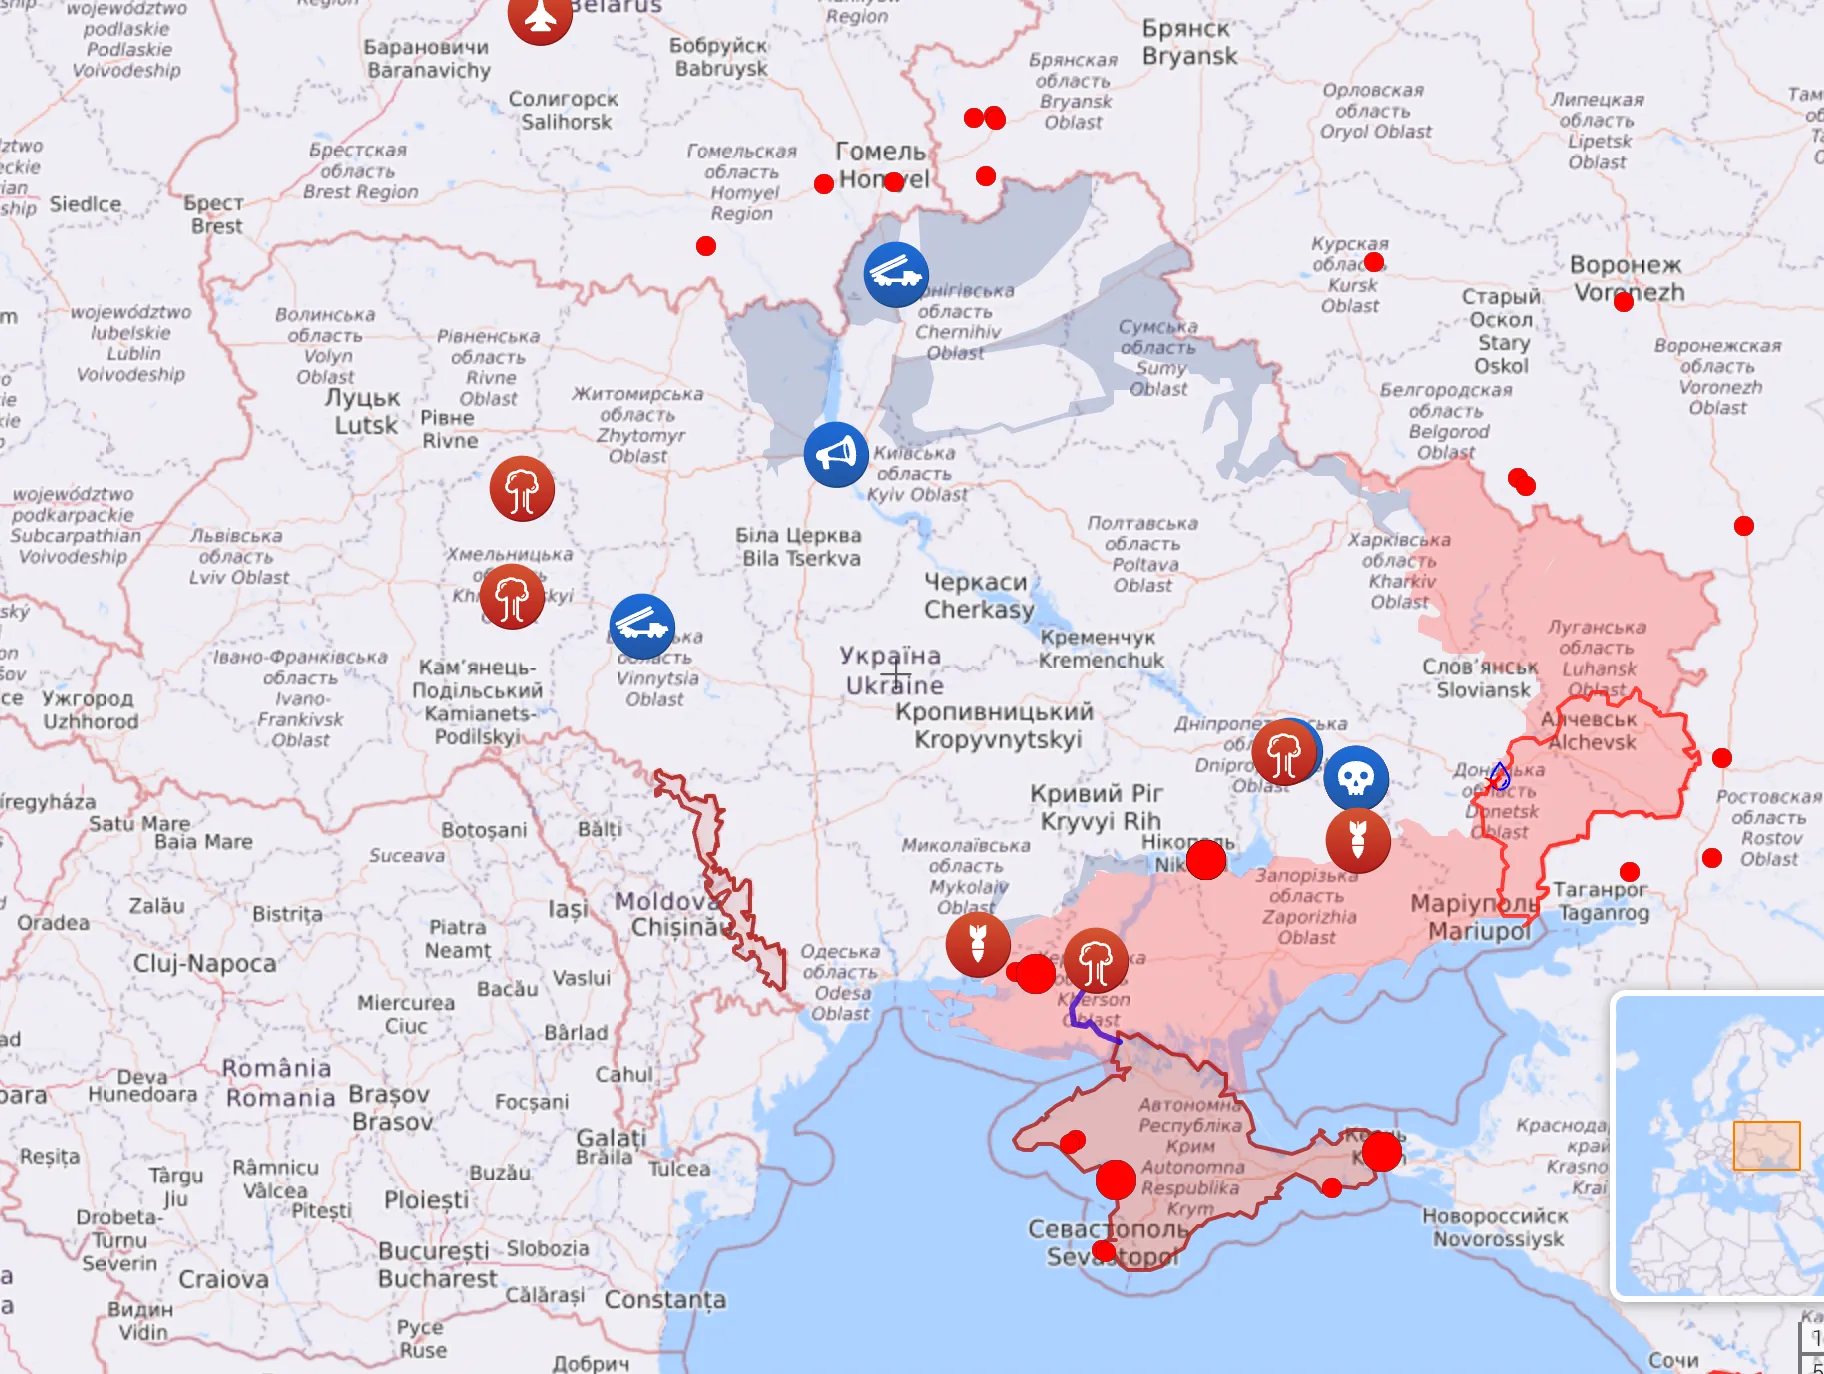 Карта бойових дій в України станом на ранок 25 серпня